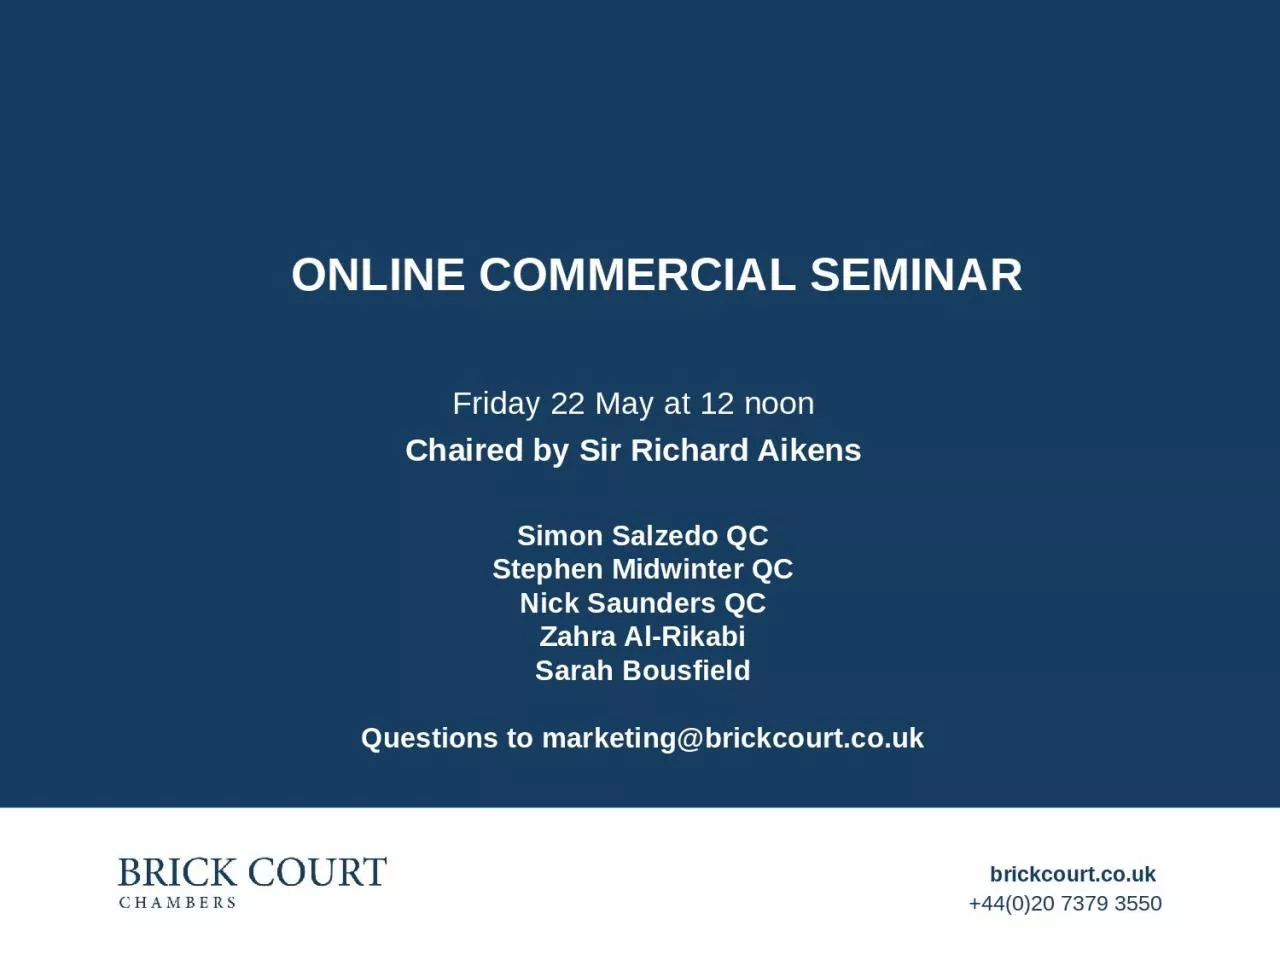 Online commercial seminar